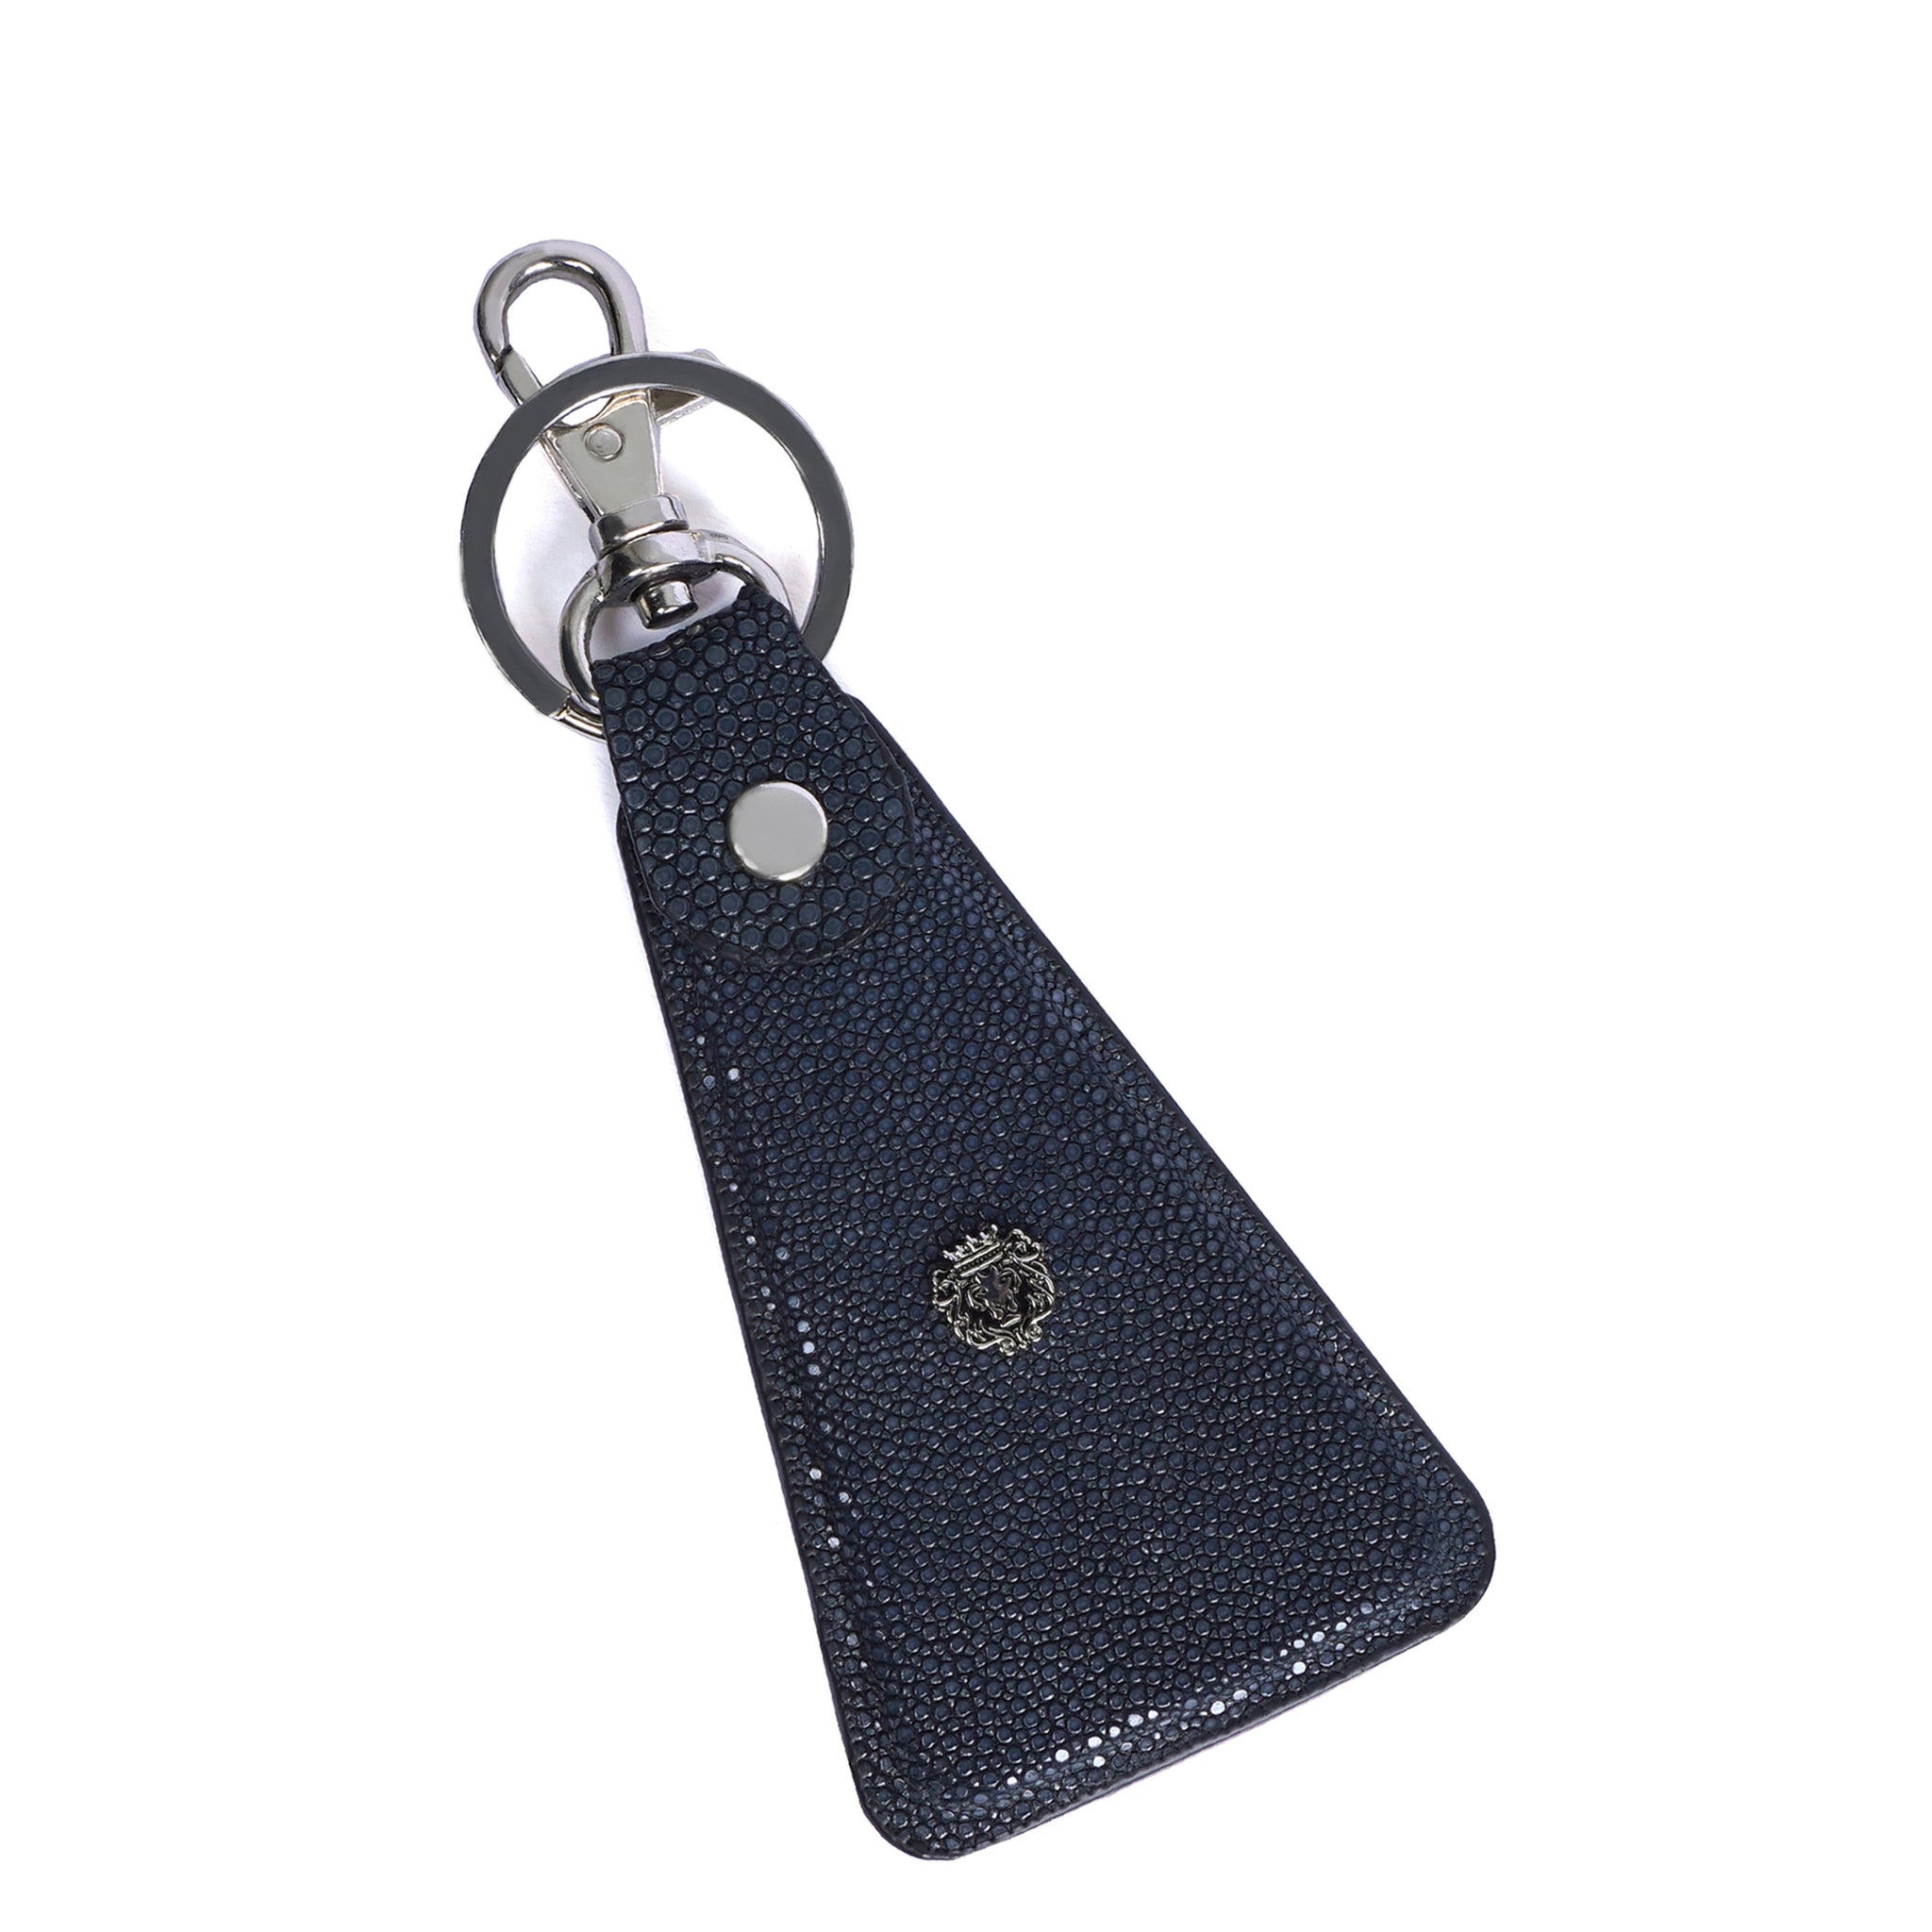 Grey Triangular Keychain Stingray Fish Leather With Catch Lock Design Belt Loop